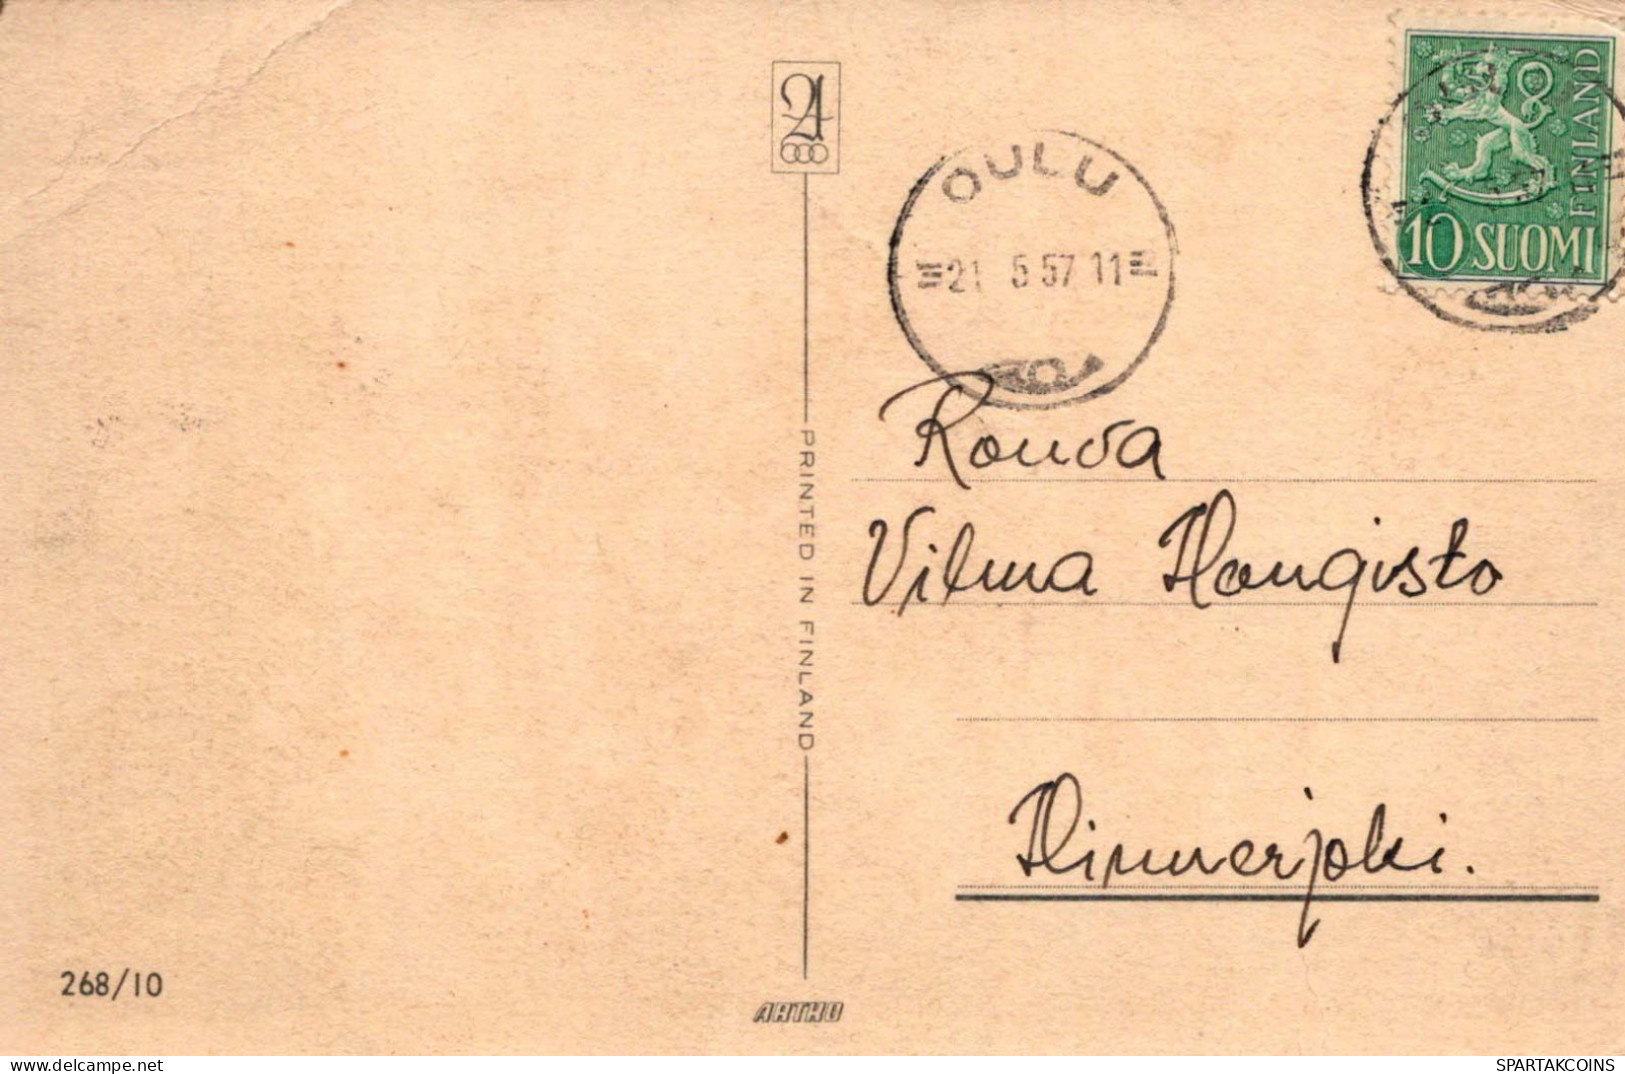 FLORES Vintage Tarjeta Postal CPA #PKE707.A - Flowers